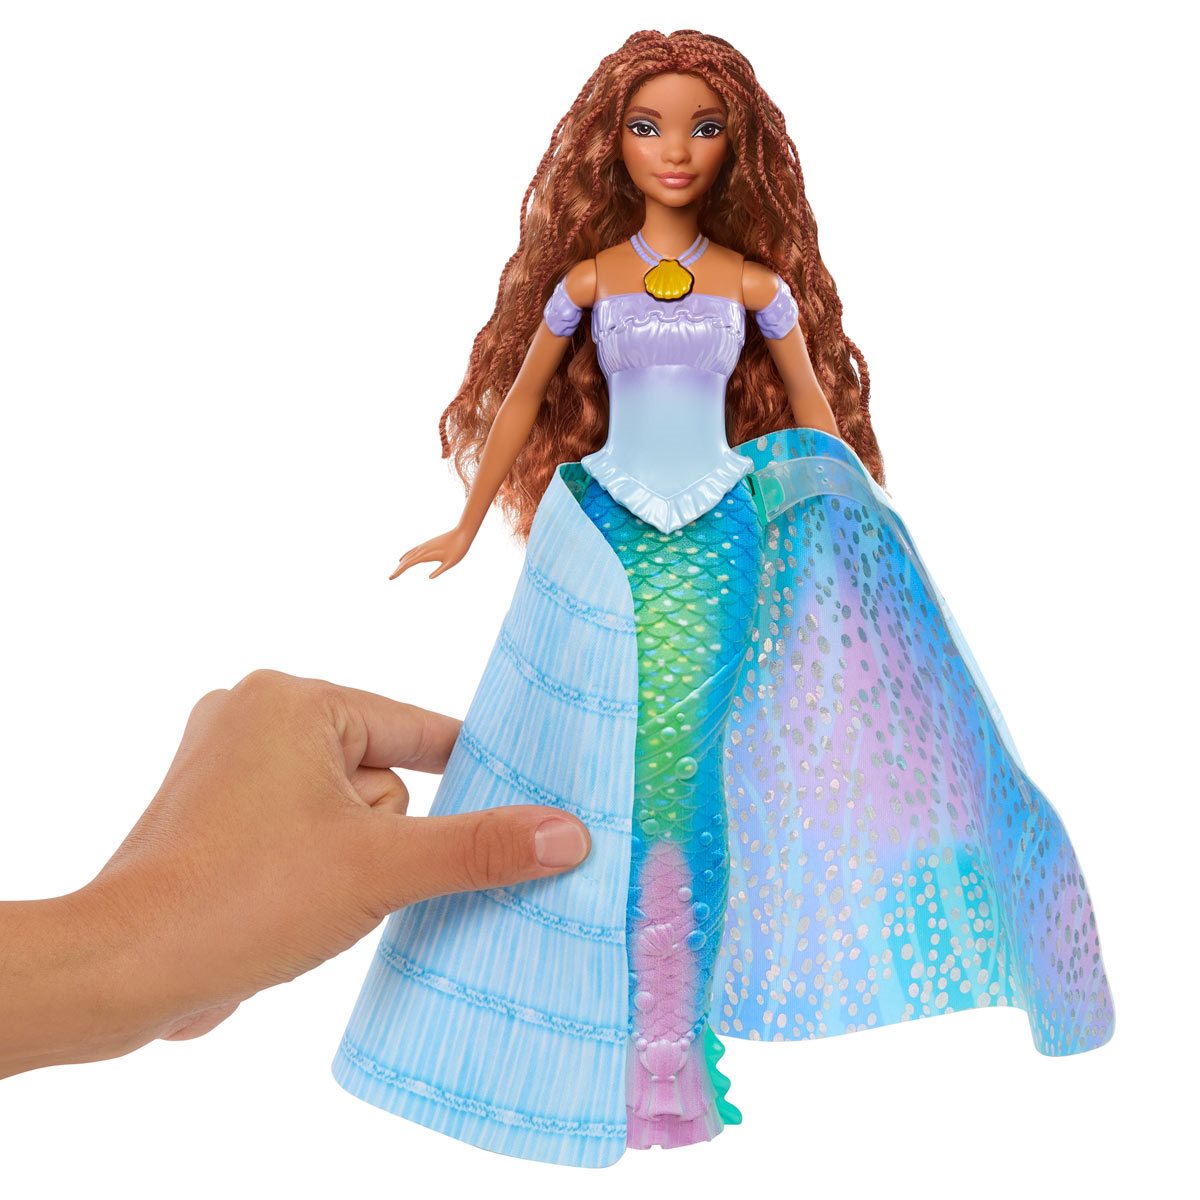 The Little Mermaid Transforming Ariel Doll